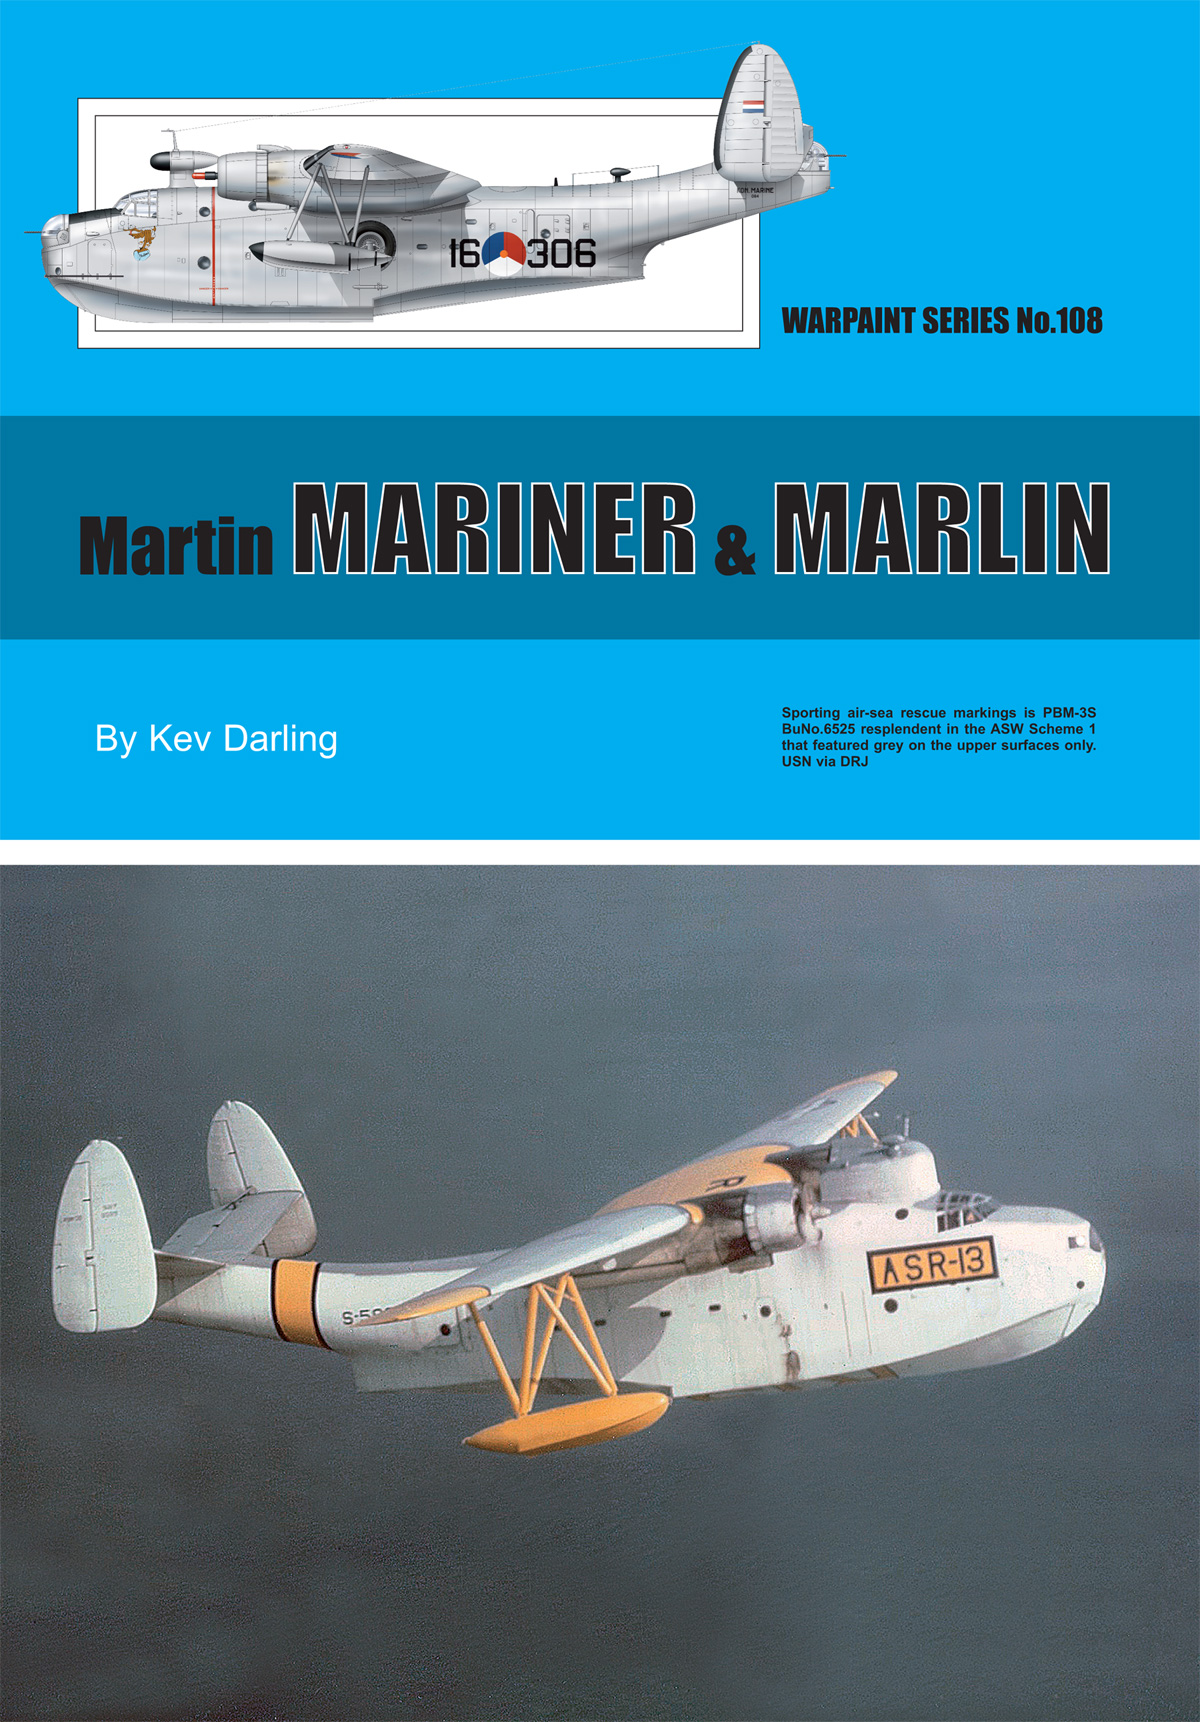 Guideline Publications Ltd No.108 Martin Mariner & Marlin No.108  in the Warpaint series  